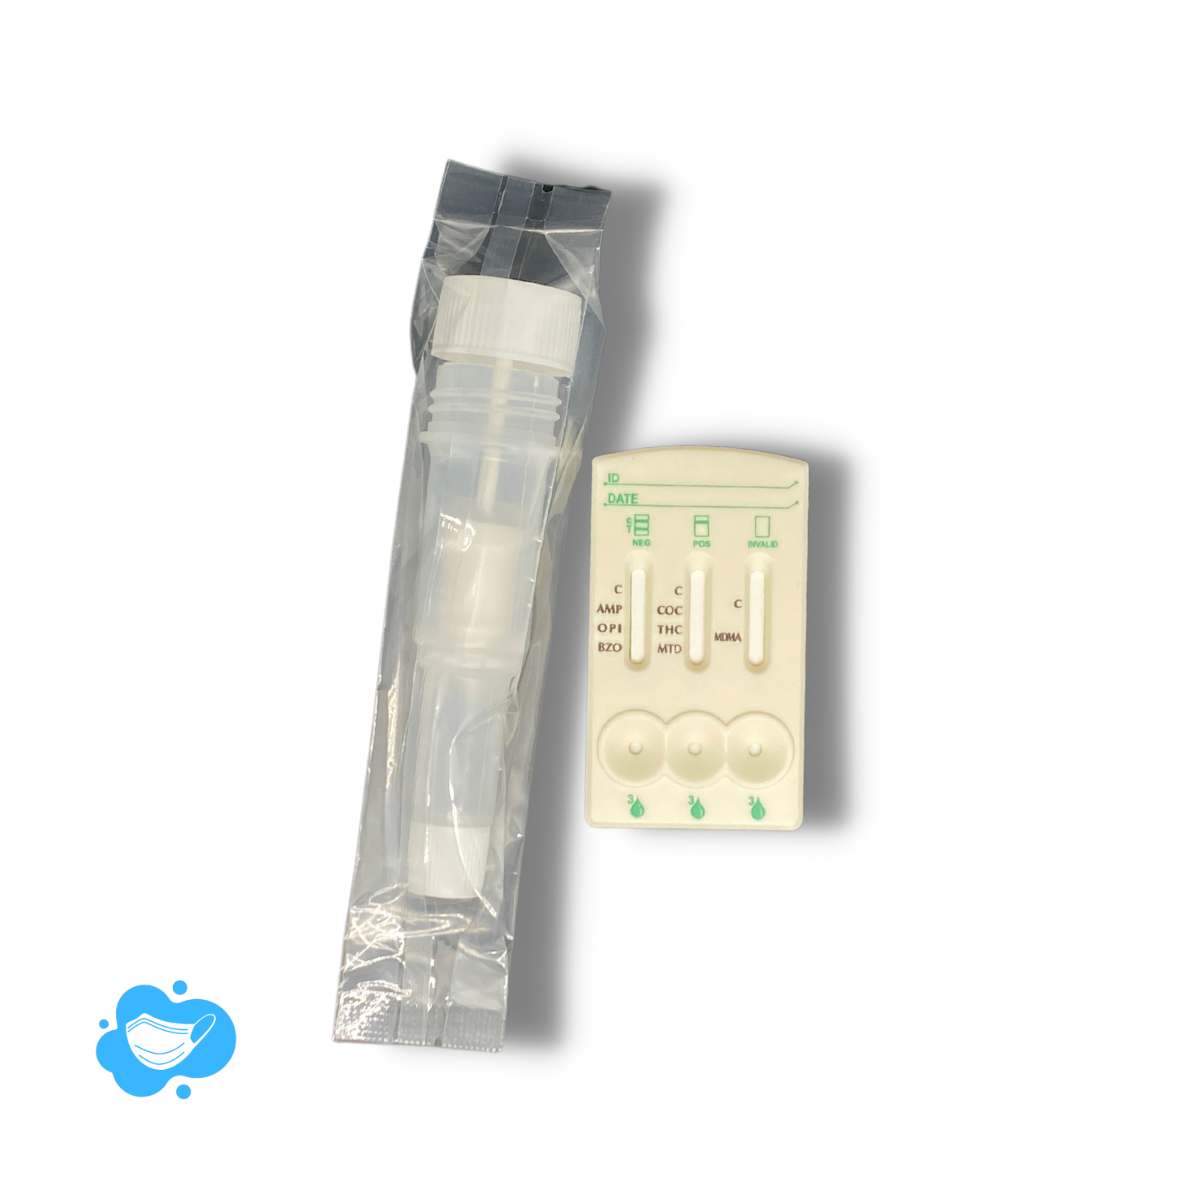 https://healthmask.de/media/image/product/2289/lg/healthmask-drogentest-speichelprobe-fuer-7-rauschgifte-testkassette.png